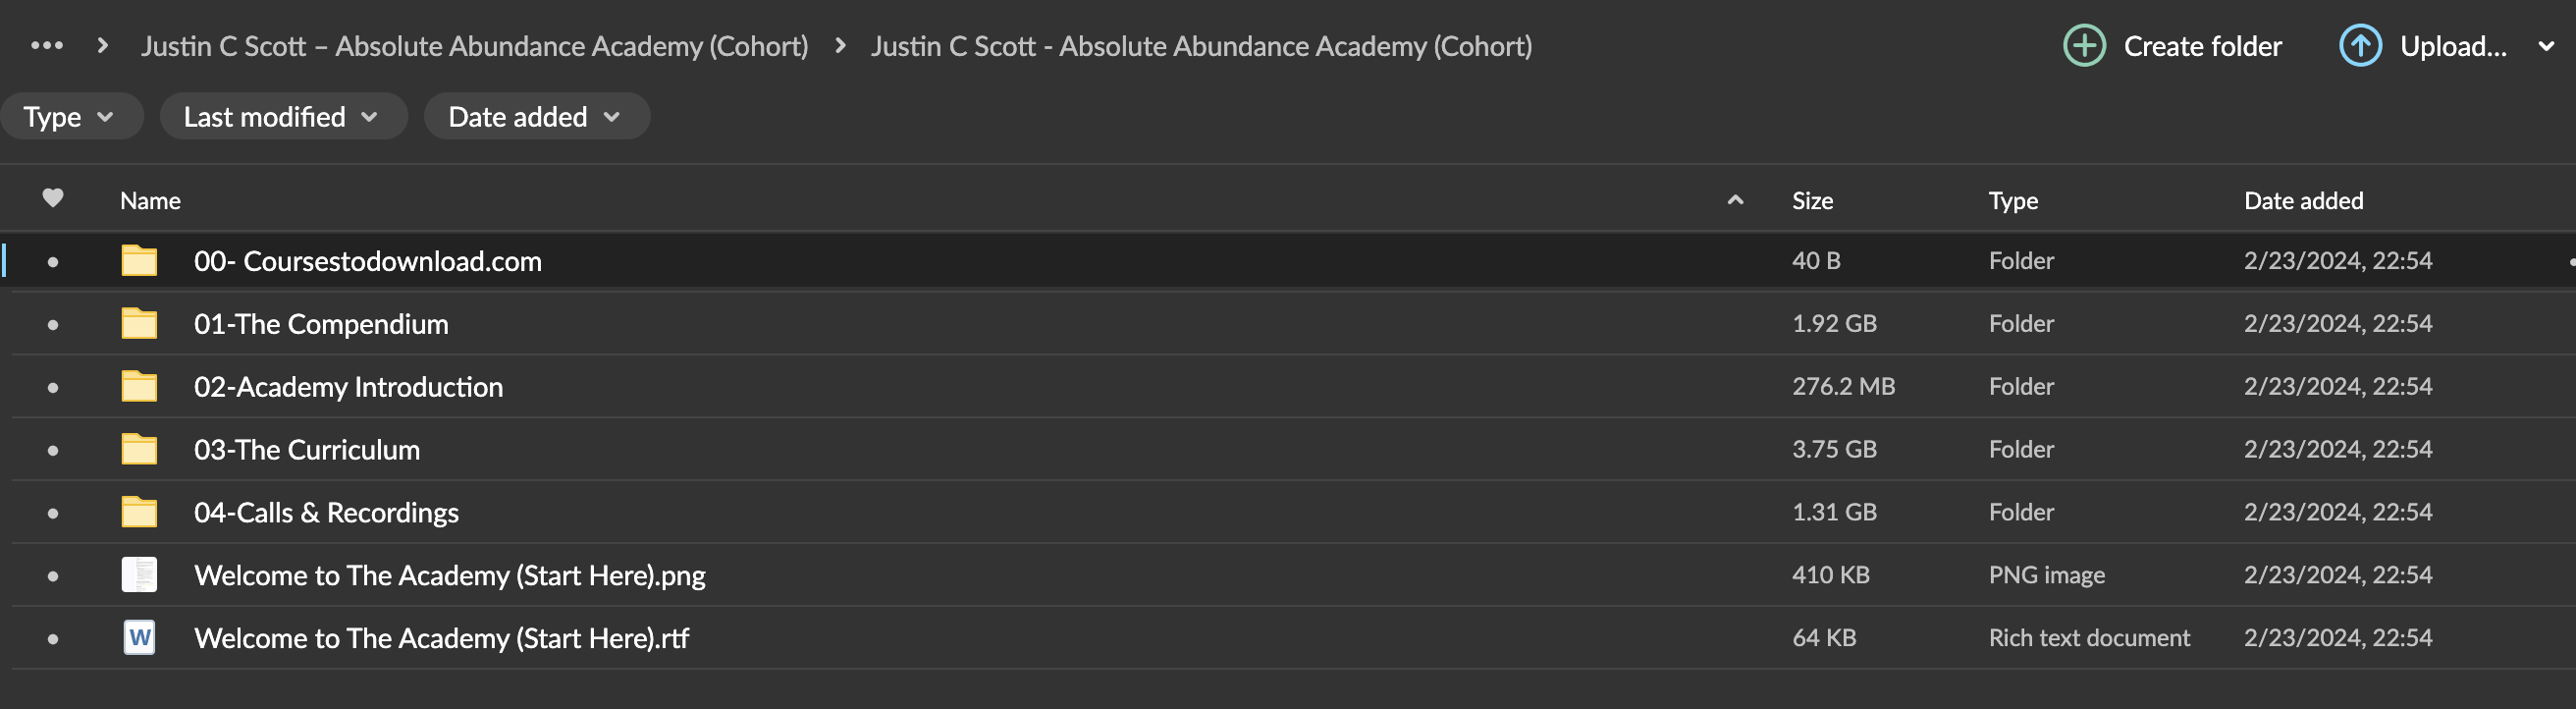 Justin C Scott – Absolute Abundance Academy (Cohort) Download